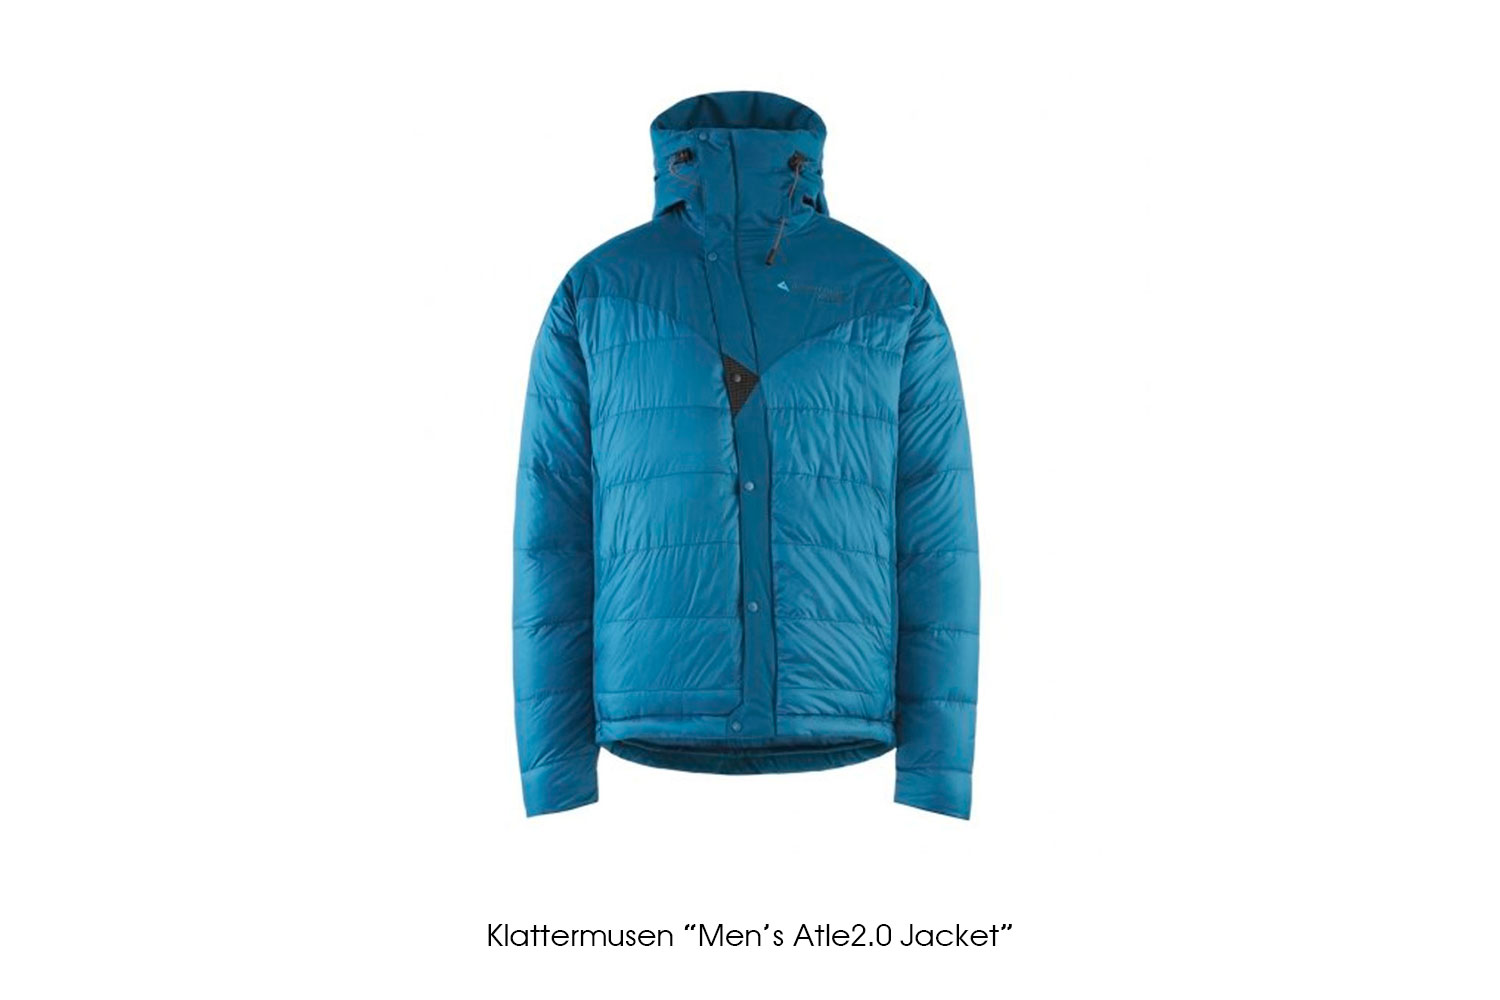 Klattermusen "Men's Atle2.0 Jacket"